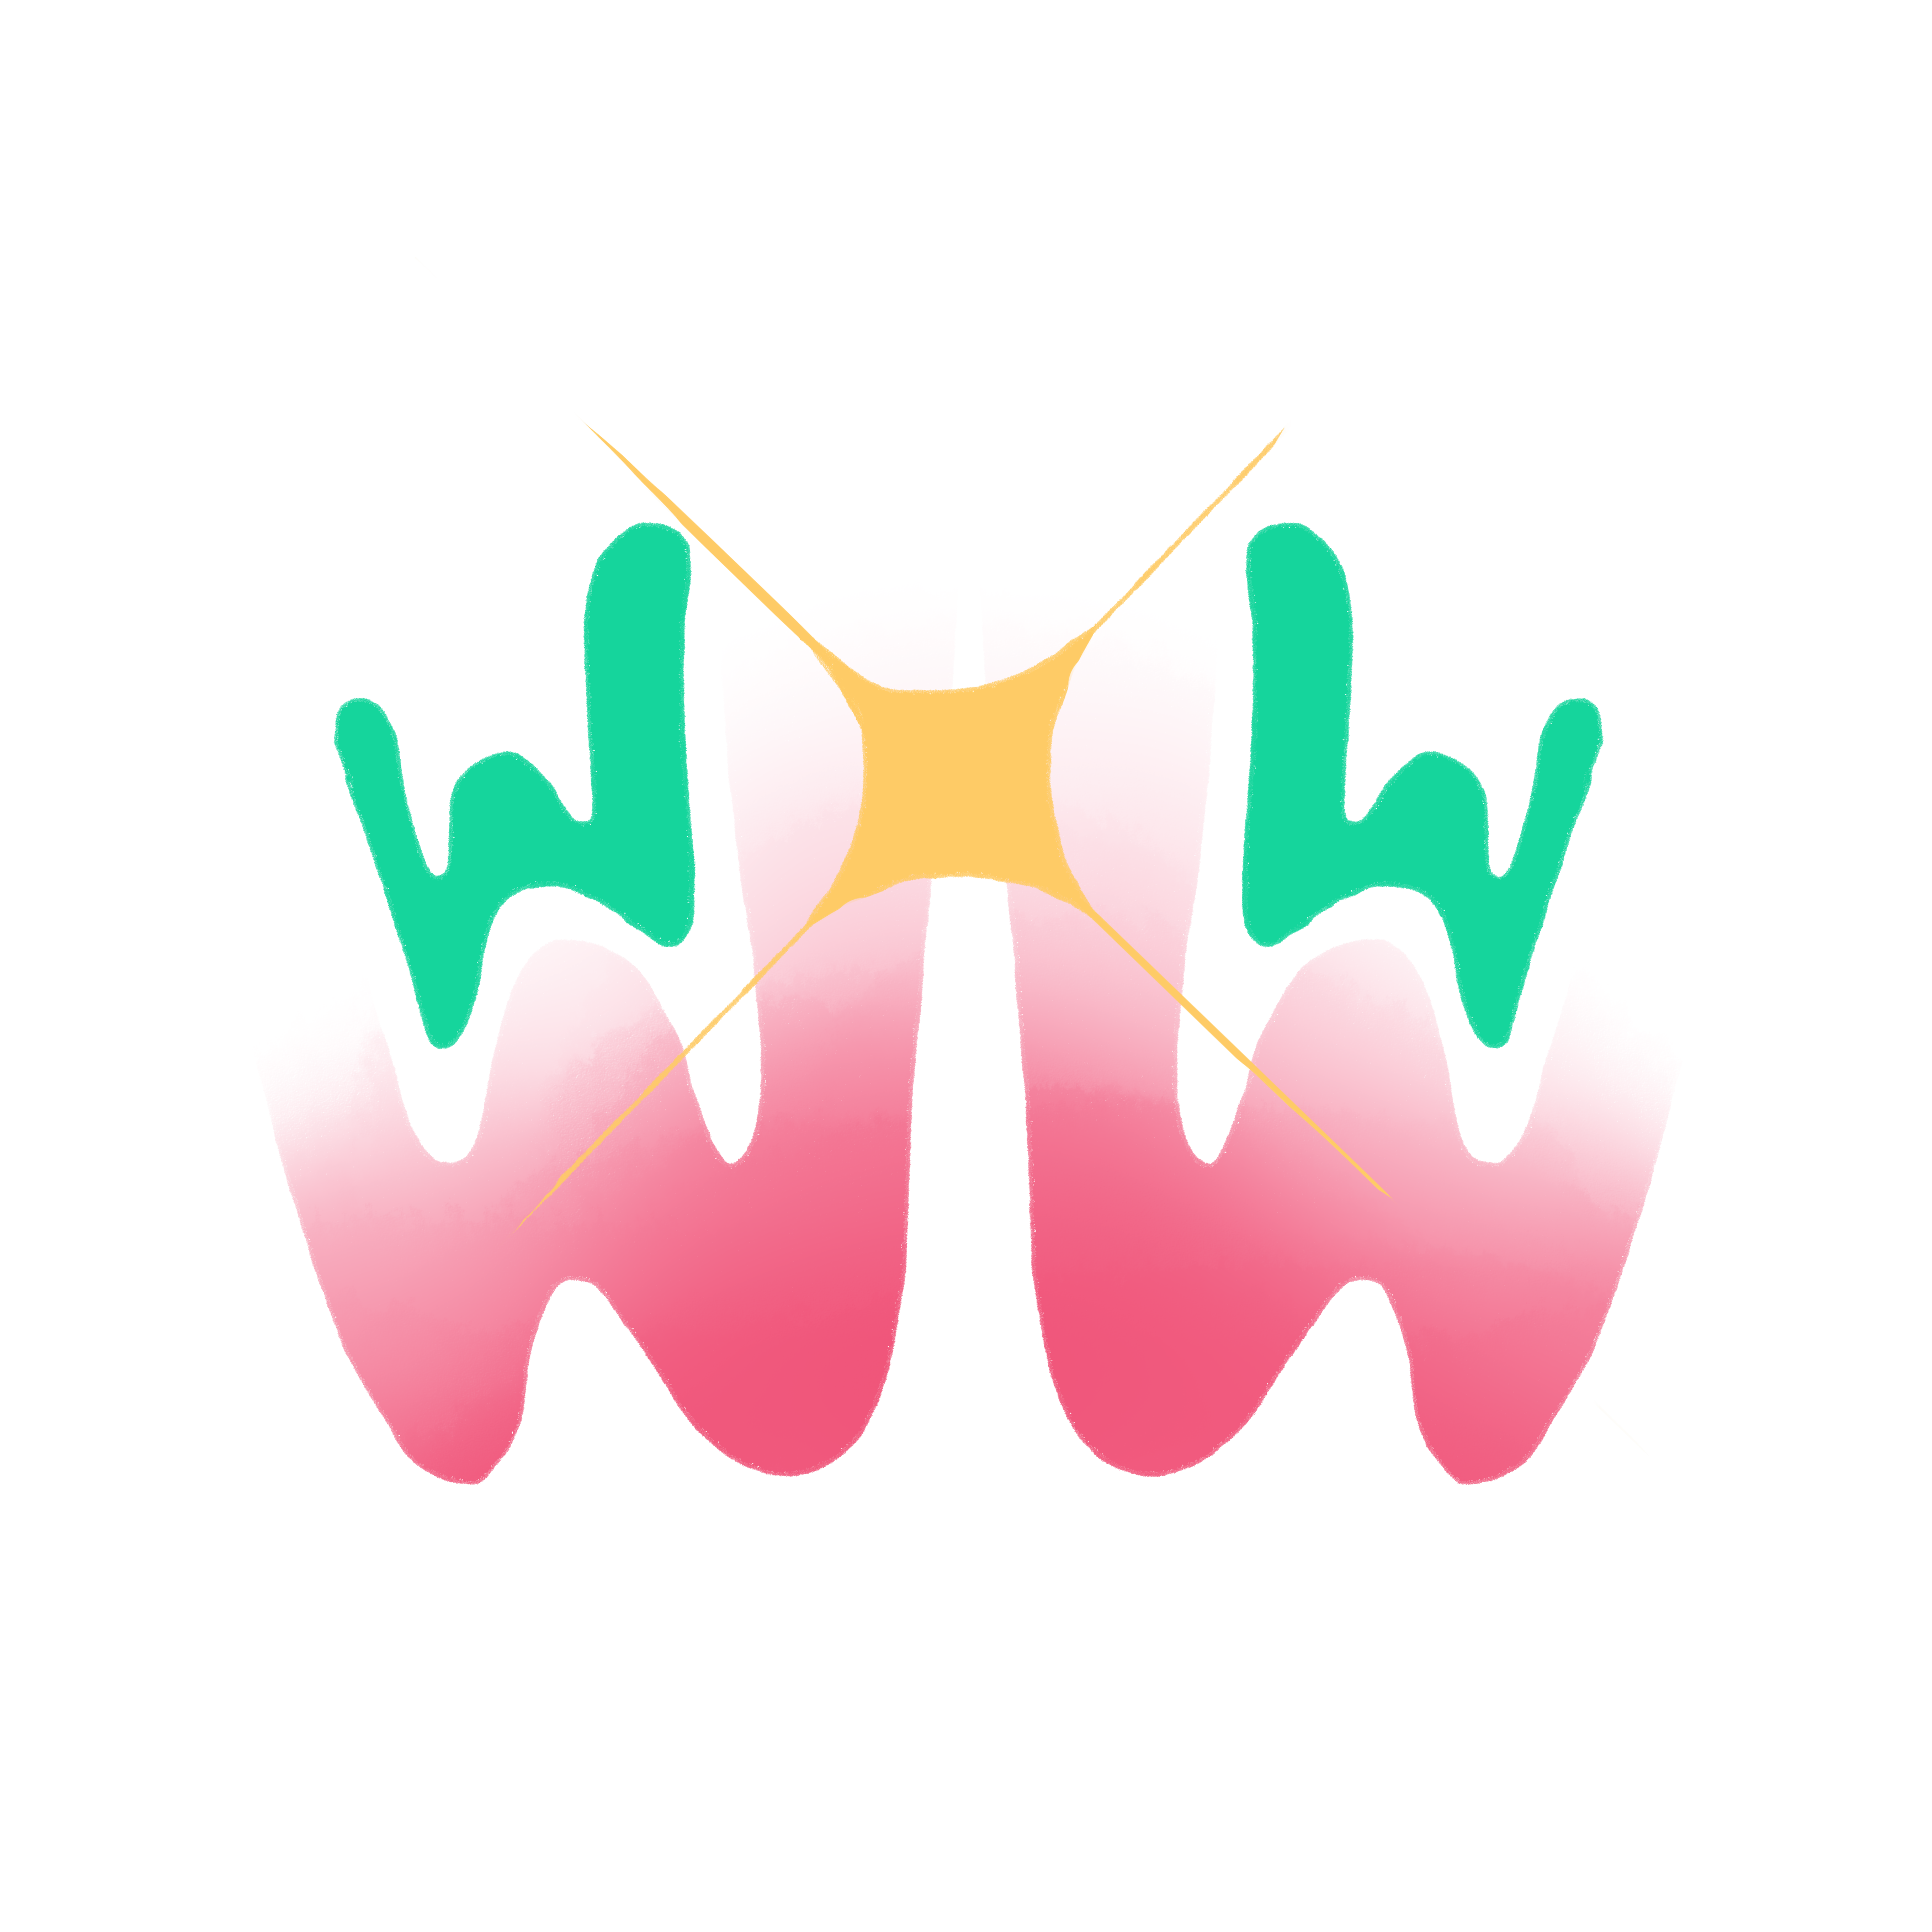 WhichWord logo